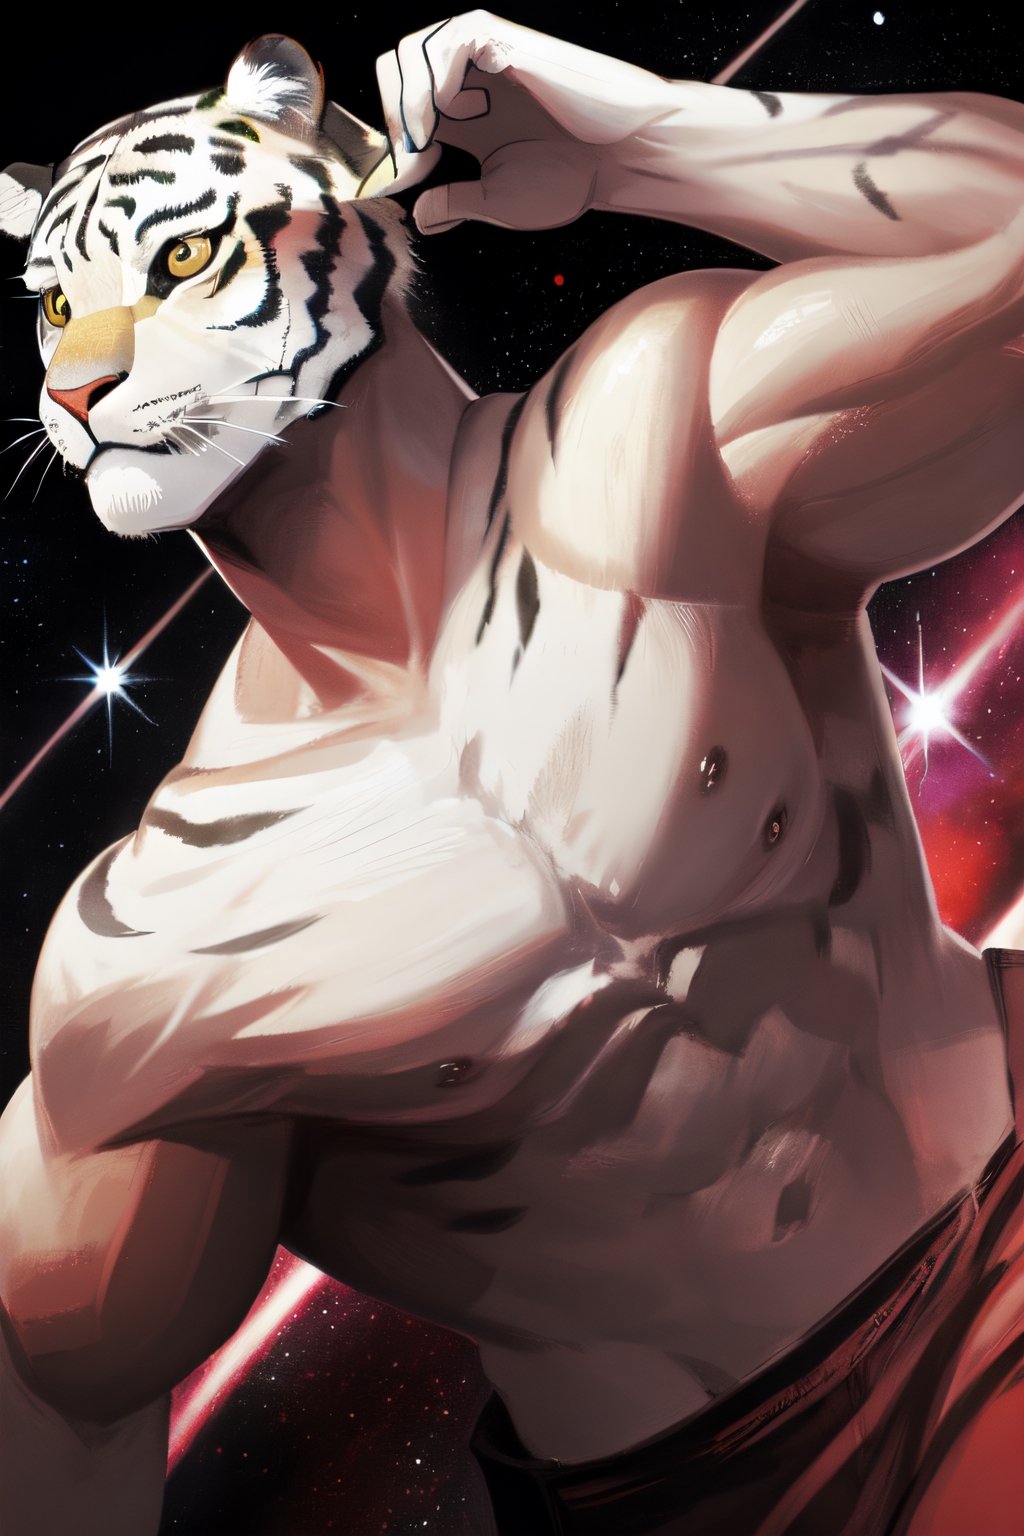 white tiger, mutant,solider,commander space, muscle body, samurai style, urmah warrior,